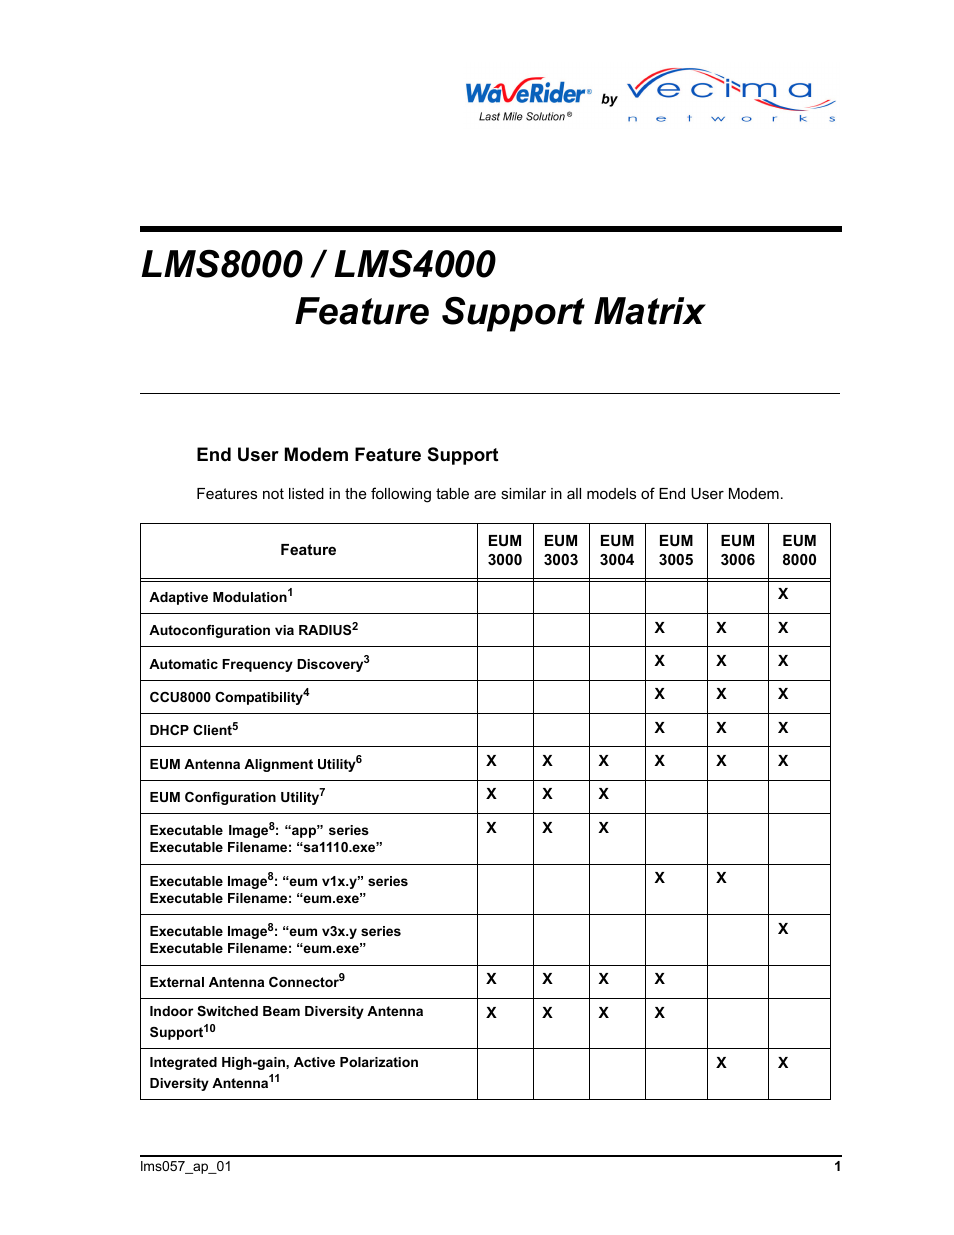 SUPPORT MATRIX LMS8000